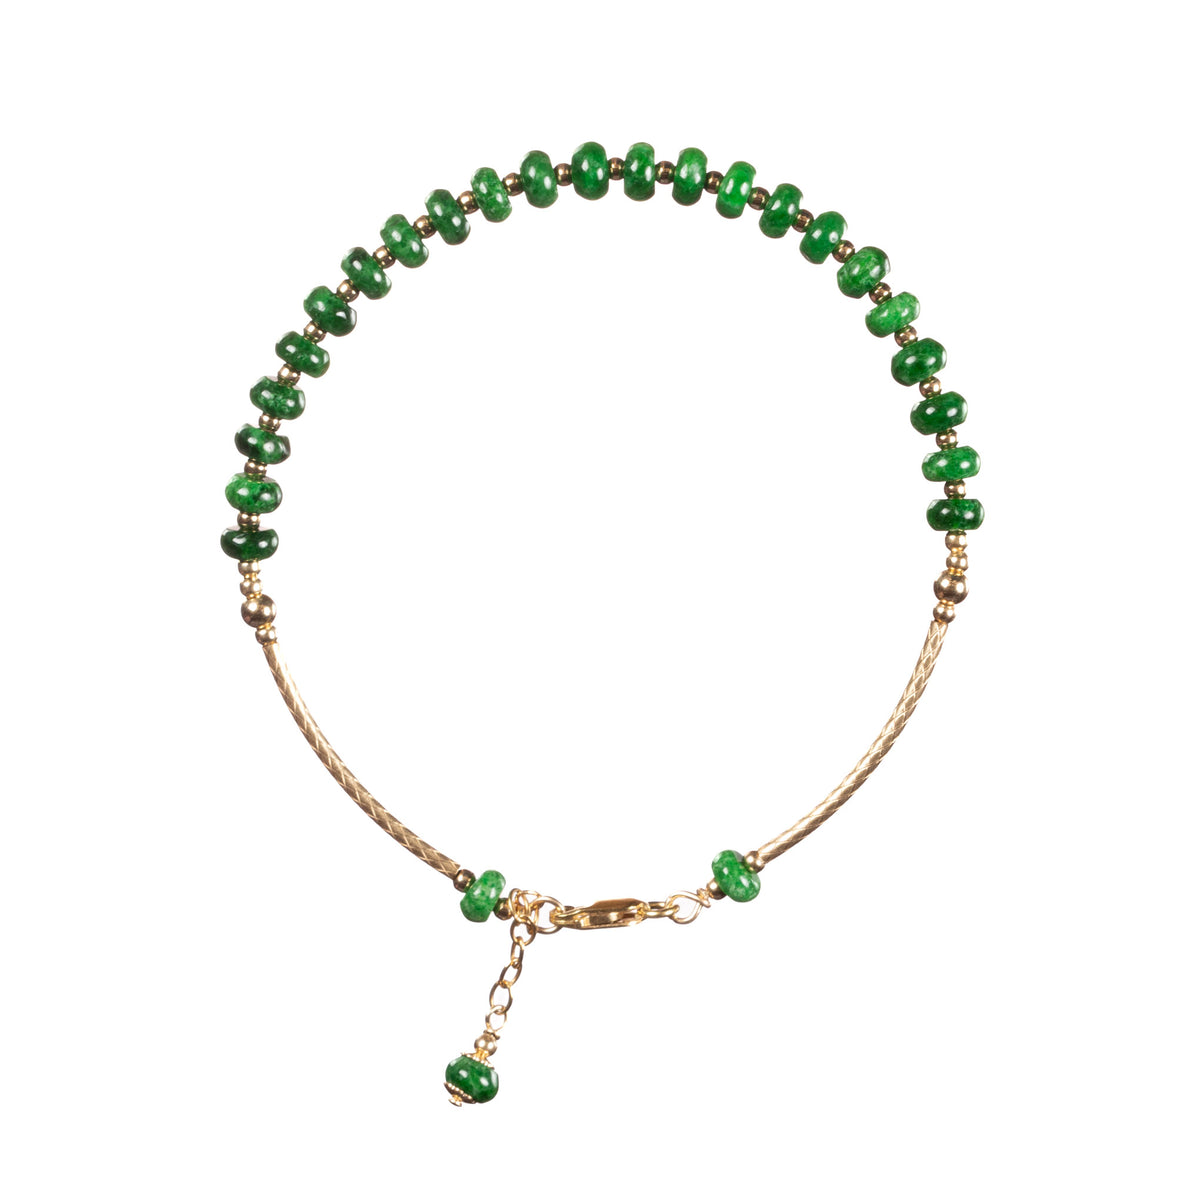 Green Jadeite Jade Bracelet with 14K Gold Adjustable Chain